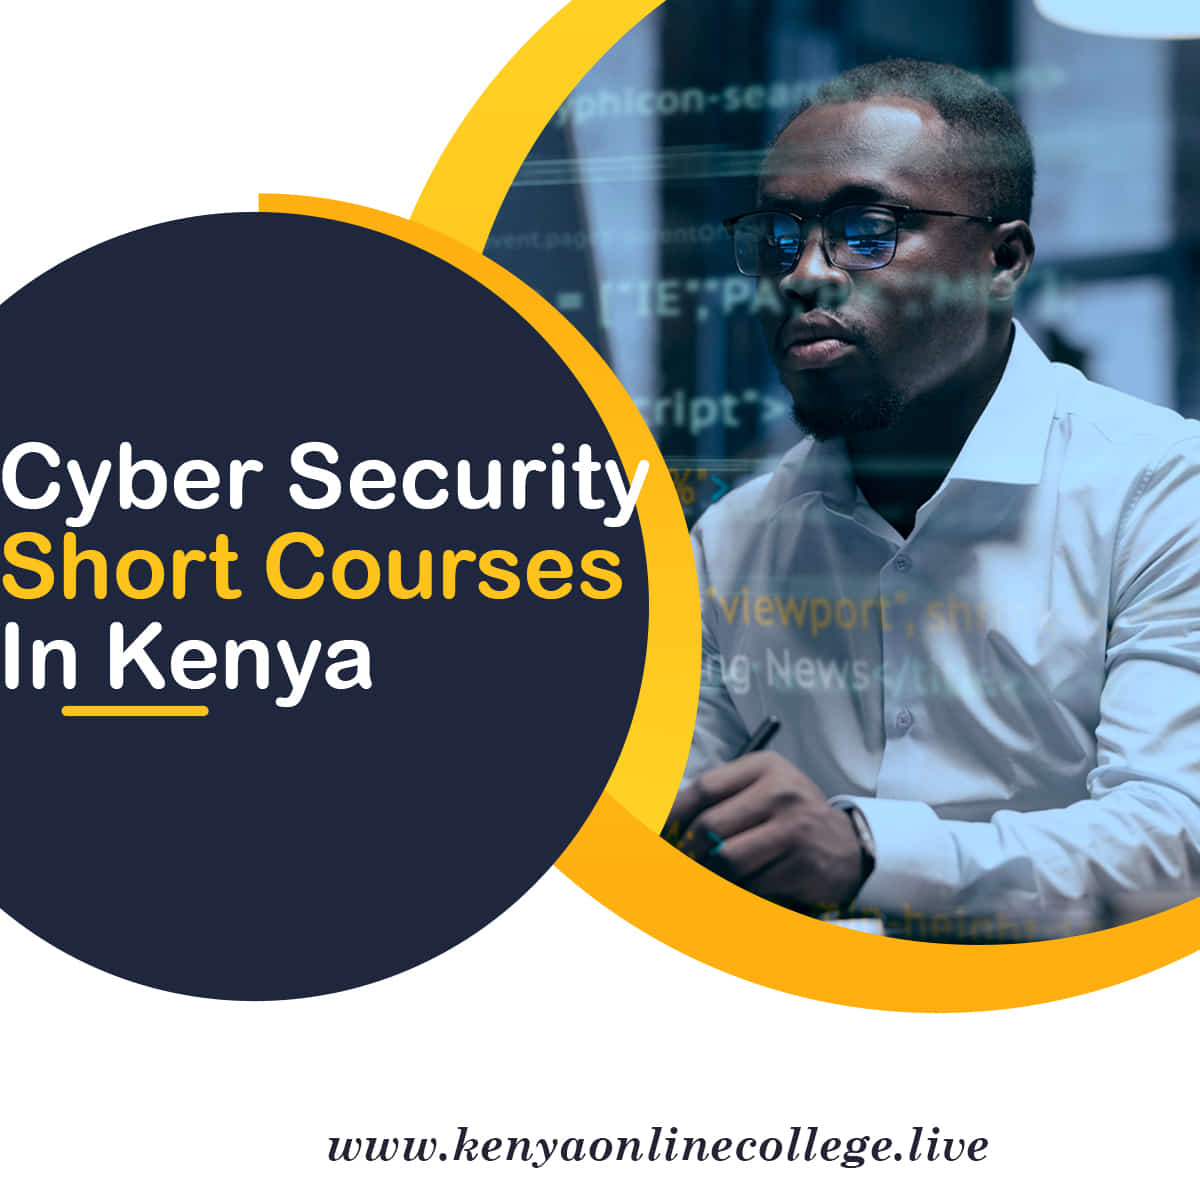 Cyber security short courses in Kenya